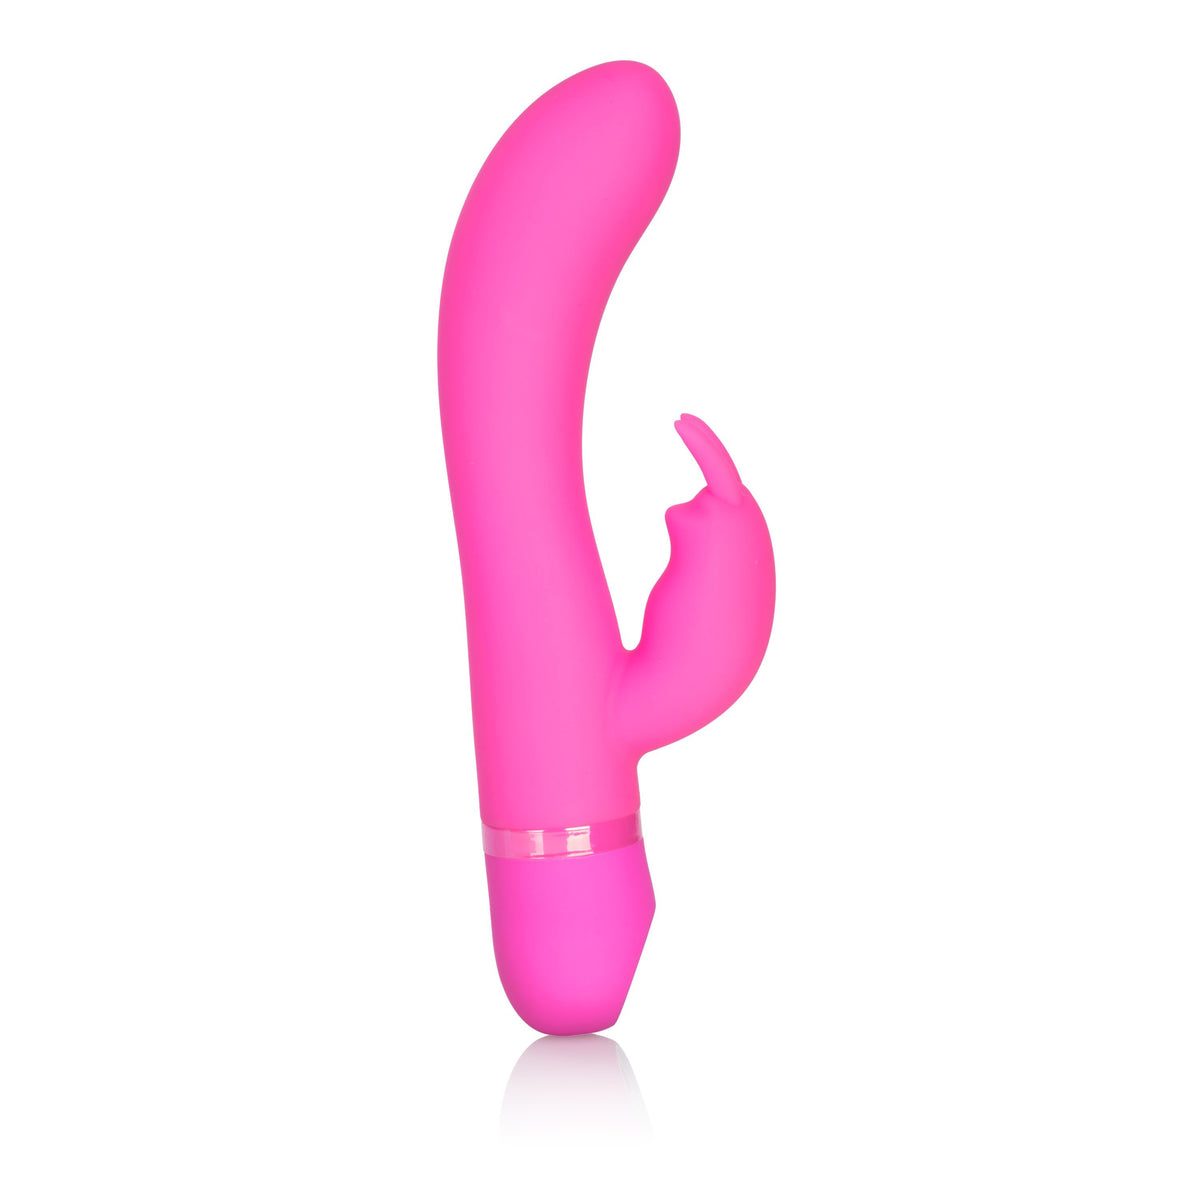 California Exotics - Spellbound Bunny Vibrator (Pink) CE1536 CherryAffairs